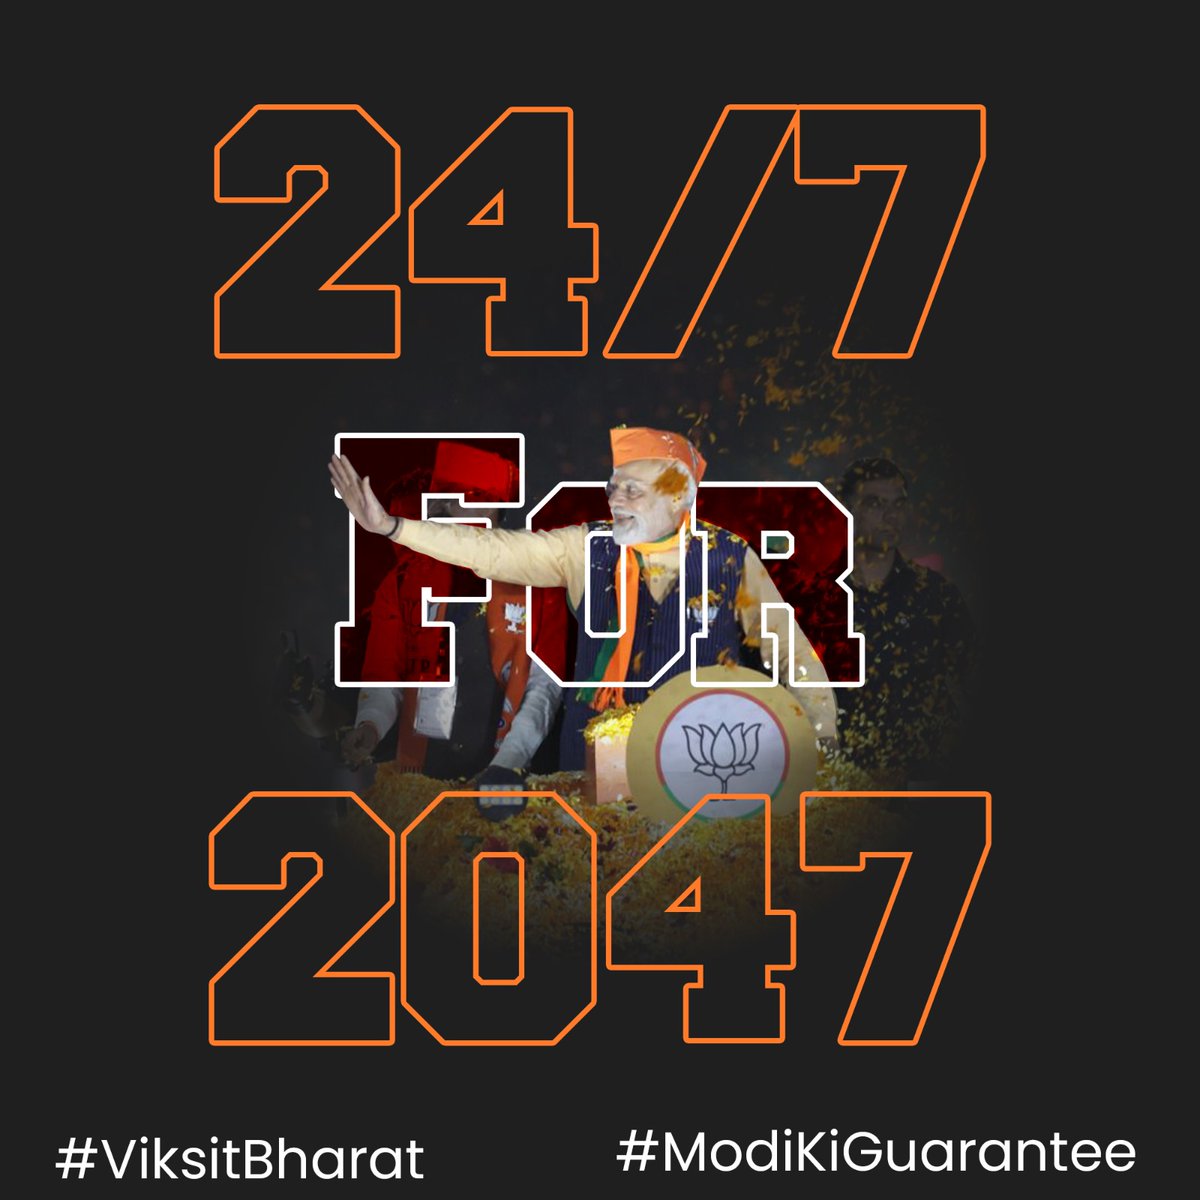 The Karmayogi..

Working relentlessly 24/7 for #ViksitBharat in 2047!

#PMModi #MyPMMyPride 
#PhirEkBaarModiSarkar #ModiKiGuarantee #Bharat2047